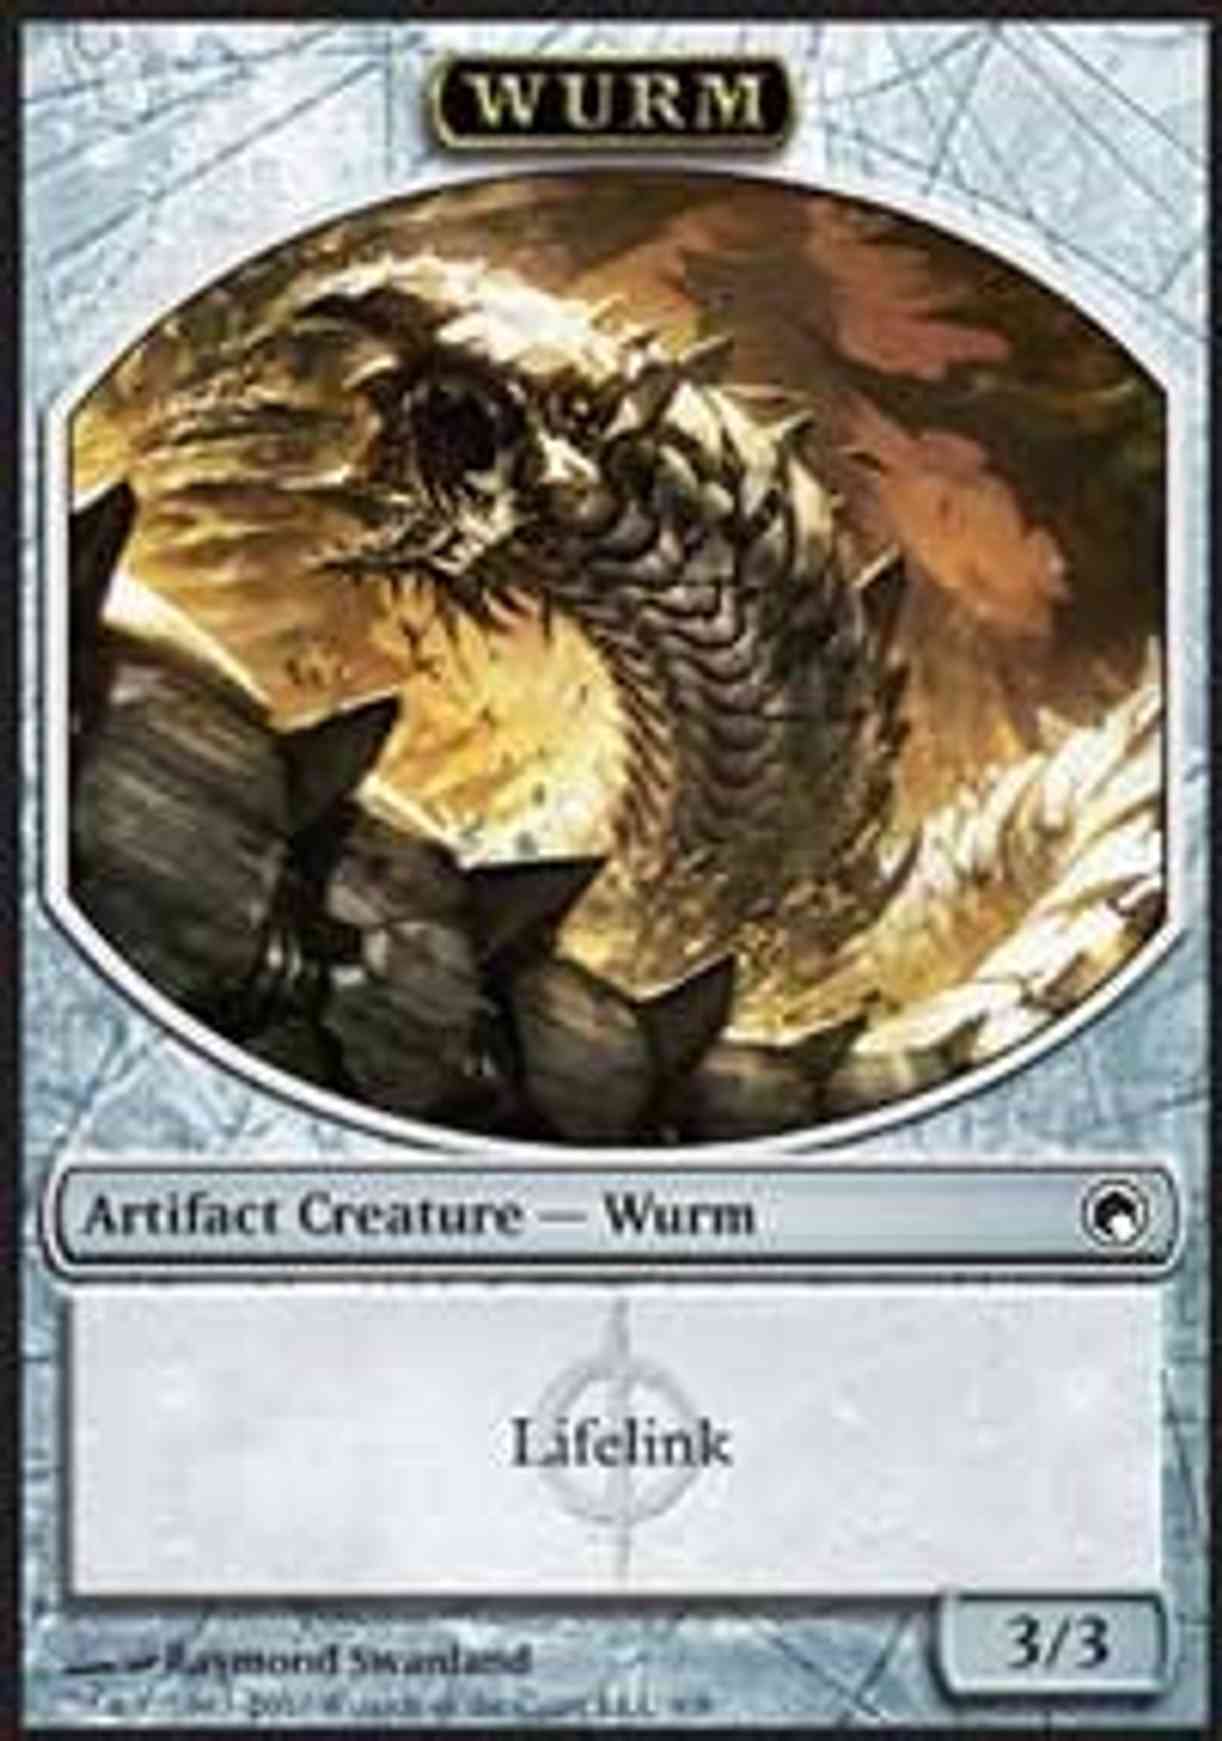 Wurm Token (Lifelink) magic card front